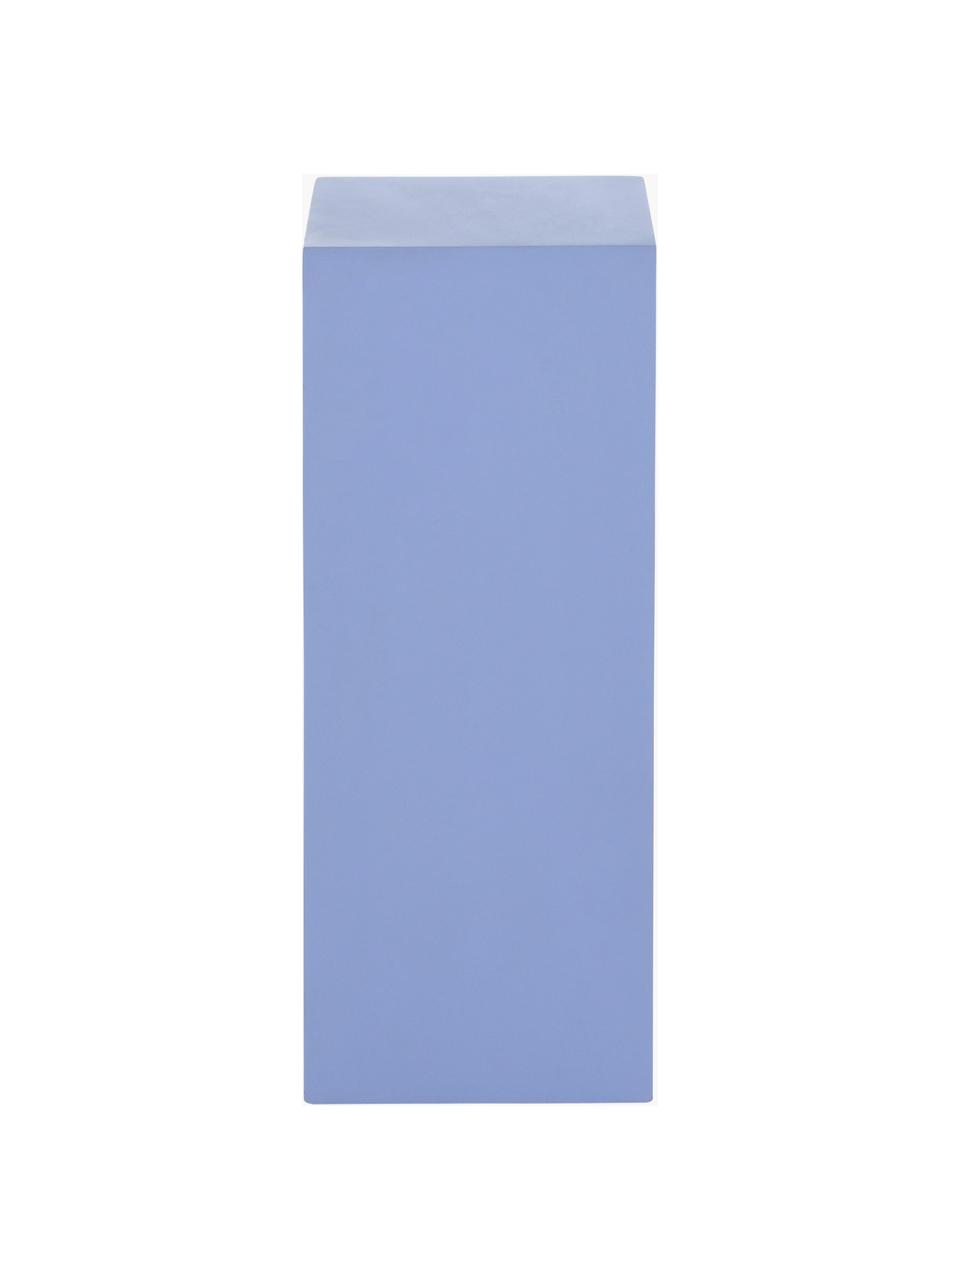 Columna decorativa Smash, Tablero de fibras de densidad media (MDF), Azul, An 20 x Al 50 cm